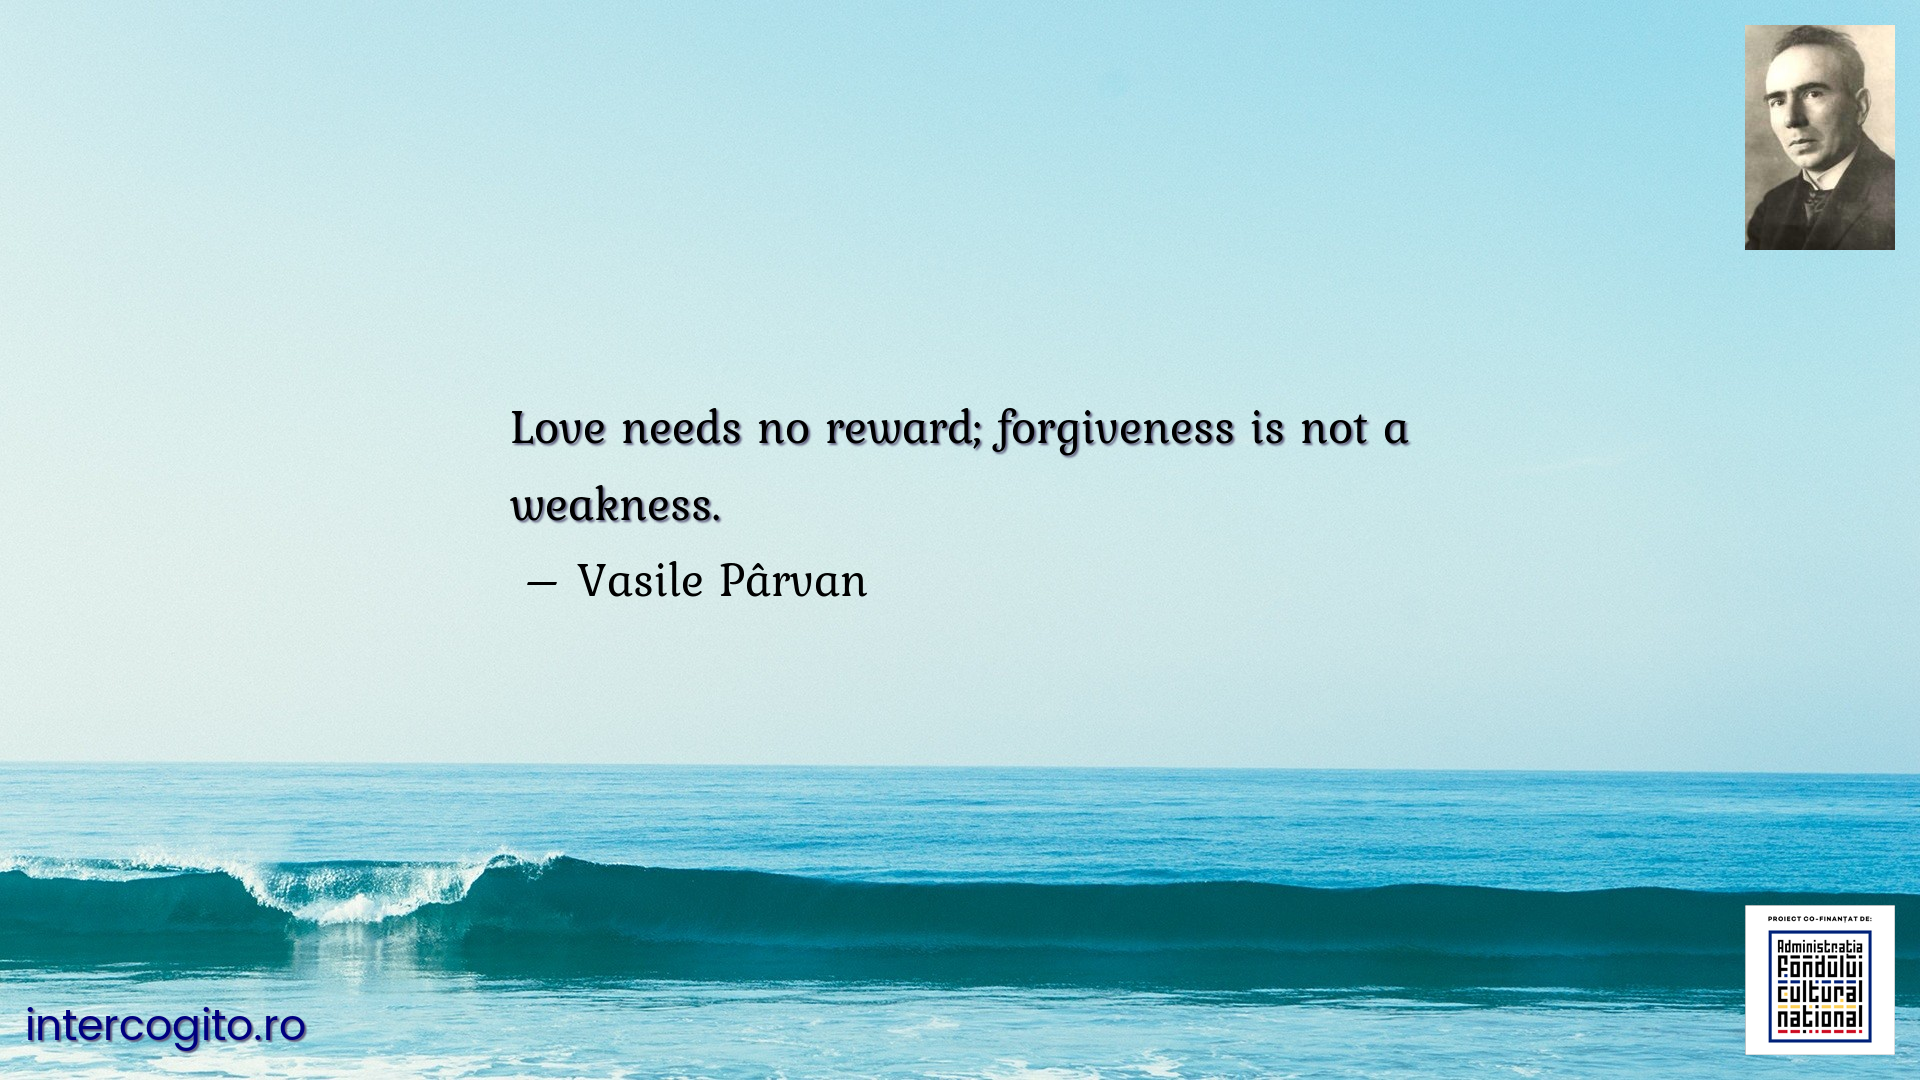 Love needs no reward; forgiveness is not a weakness.